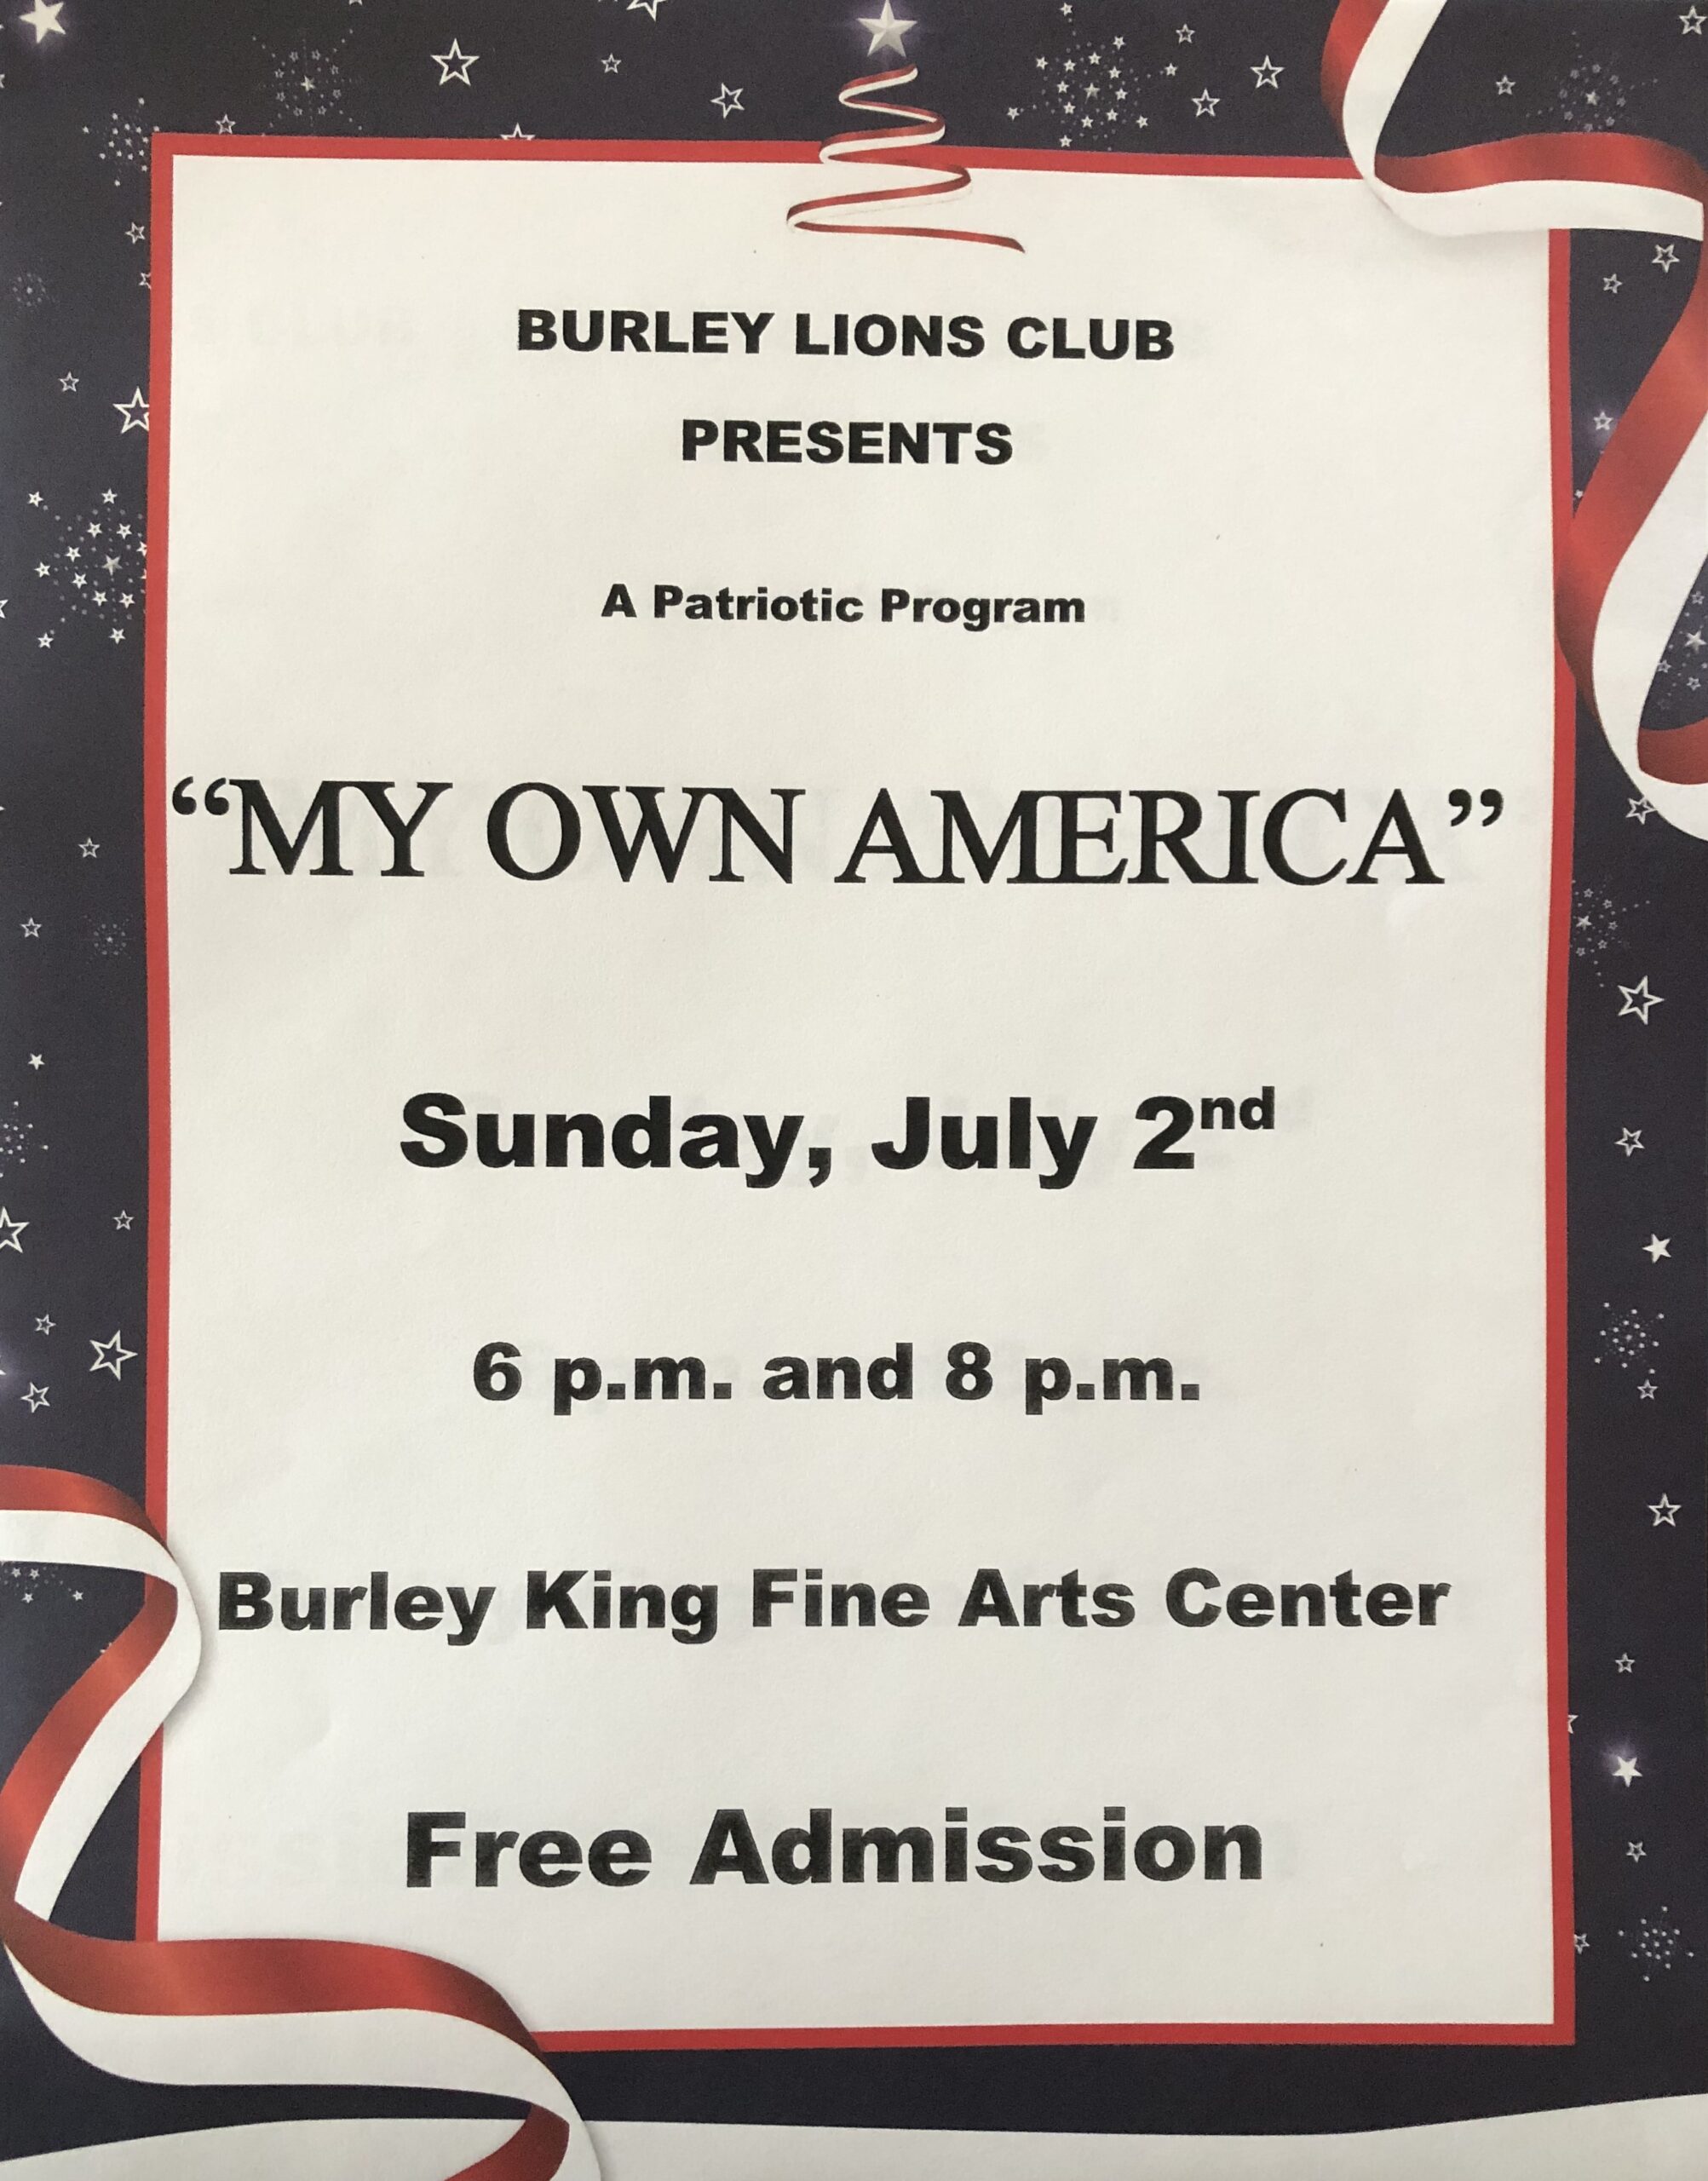 Community Patriotic Program "My Own America" at Burley King Fine Arts Center 